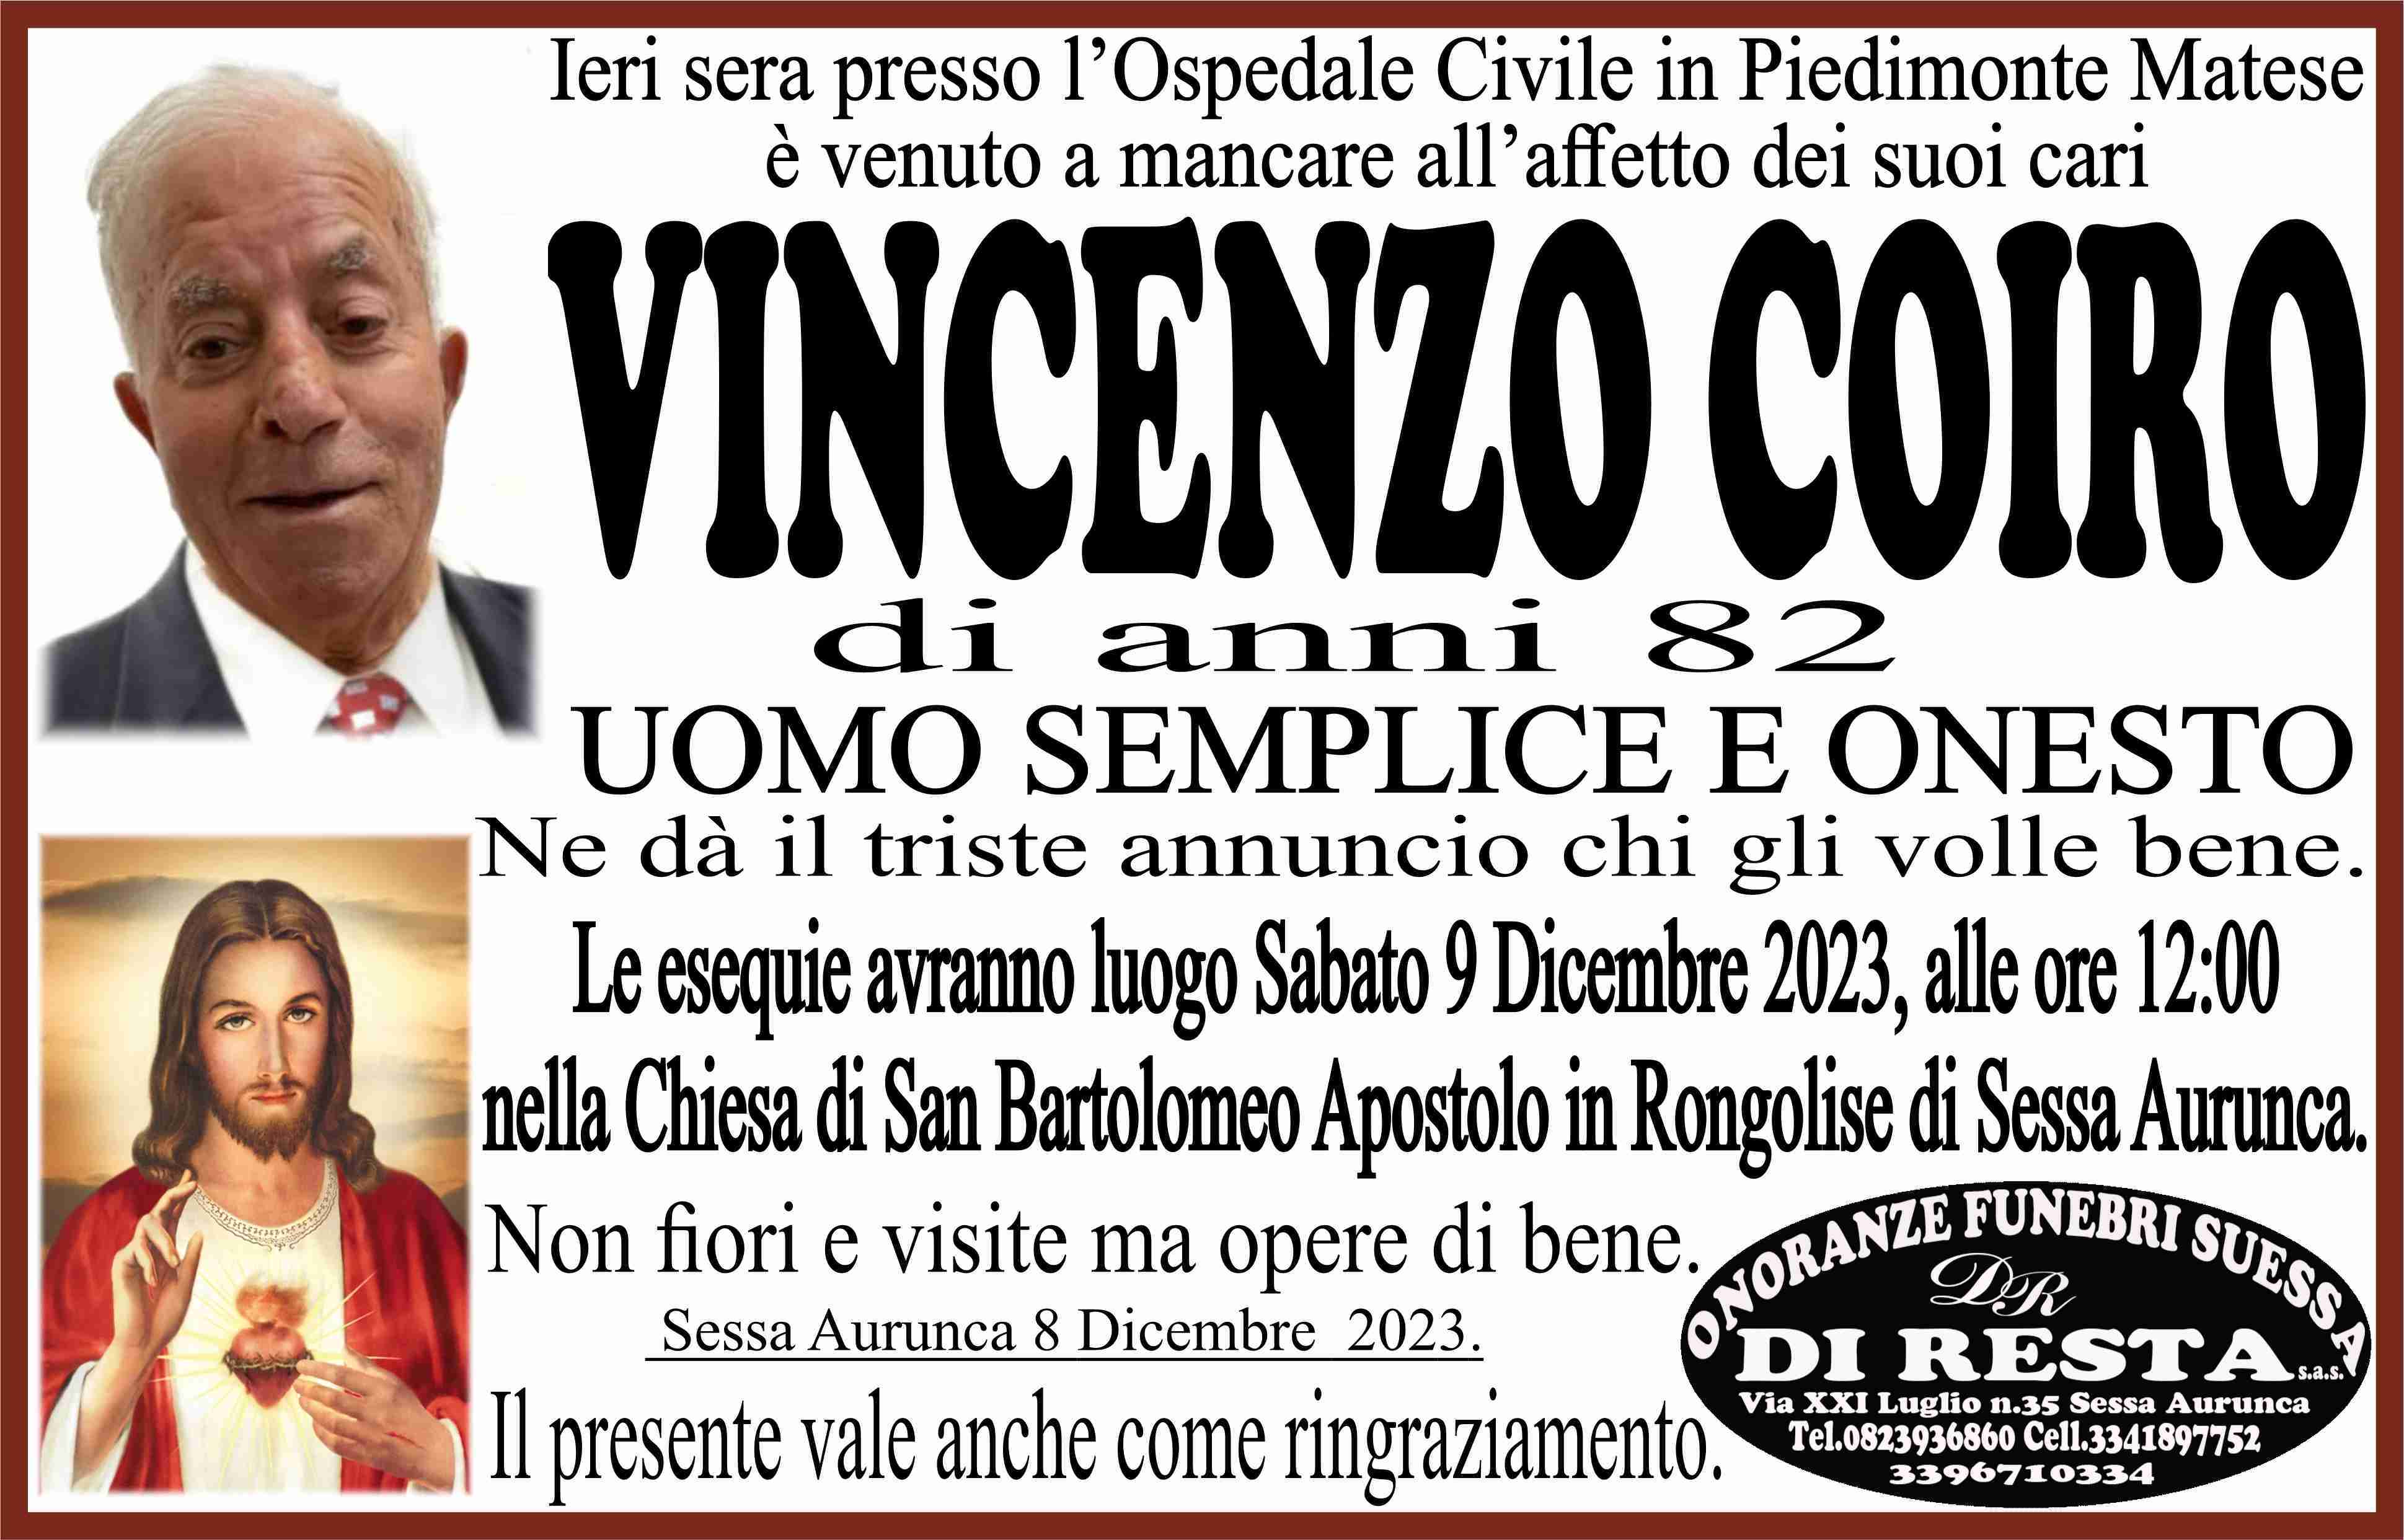 Vincenzo Coiro